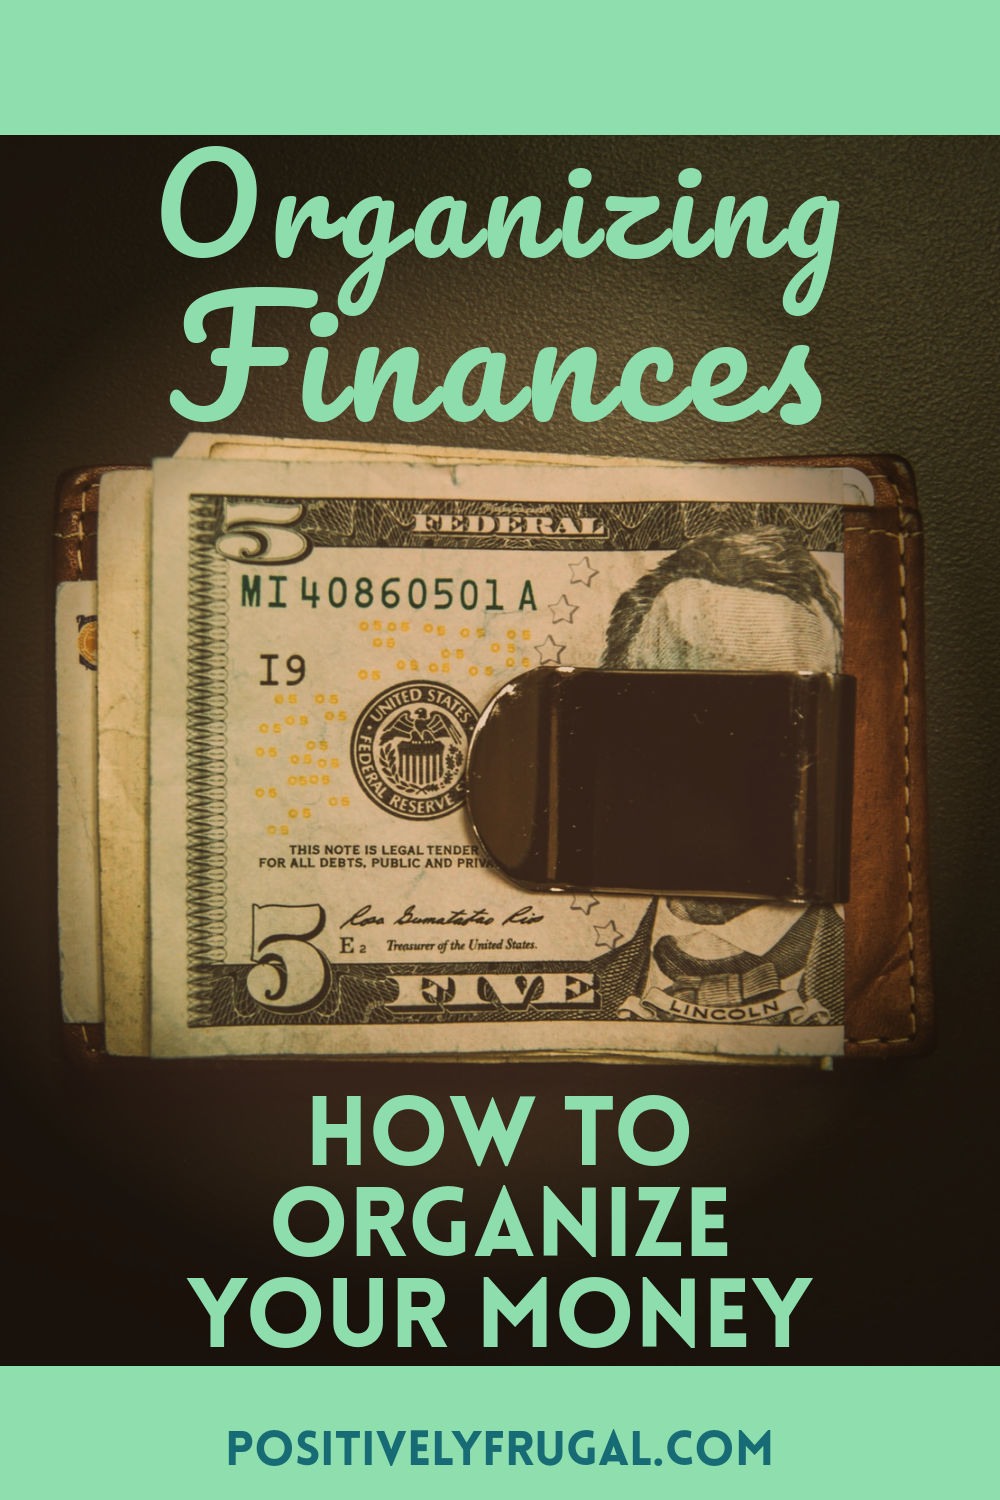 Organize Your Money Organizing Finances by PositivelyFrugal.com